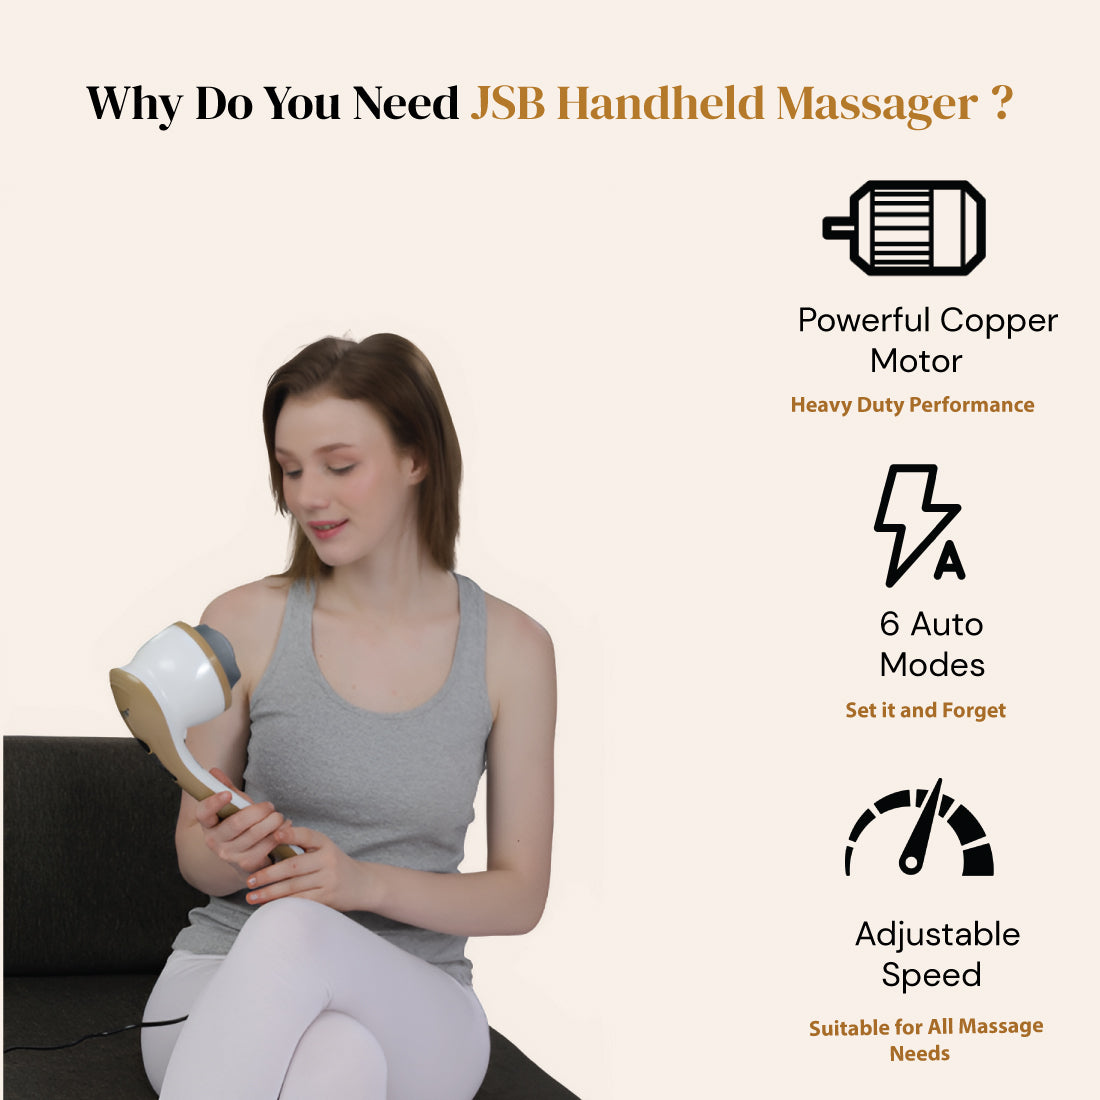 Handheld Massager Electric JSB HF141 who should use